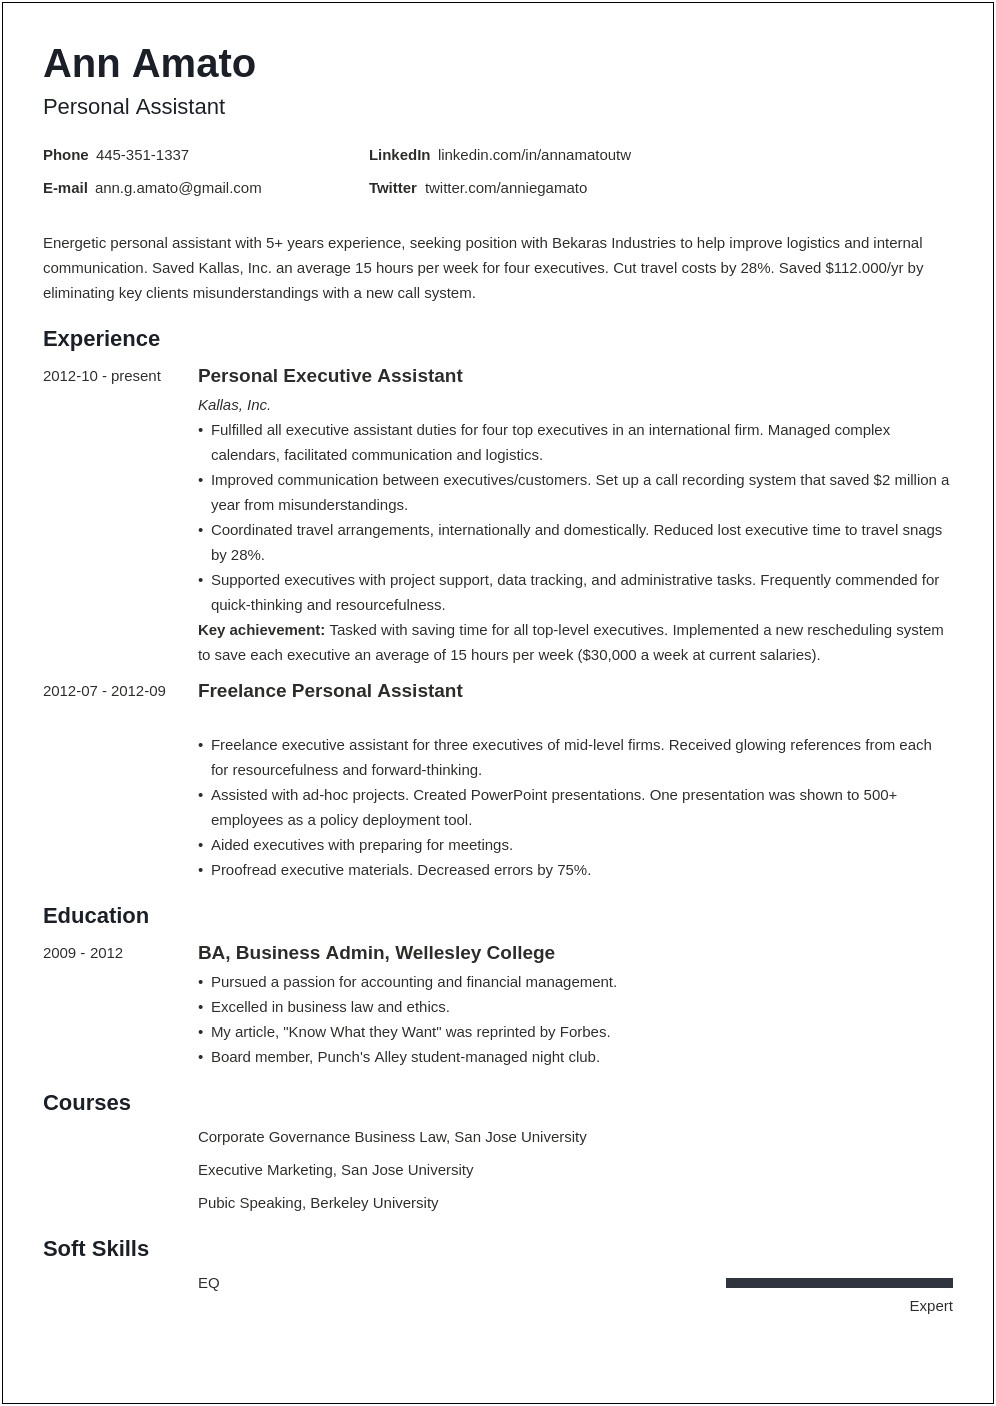 Resume Format Multiple Jobs Same Company